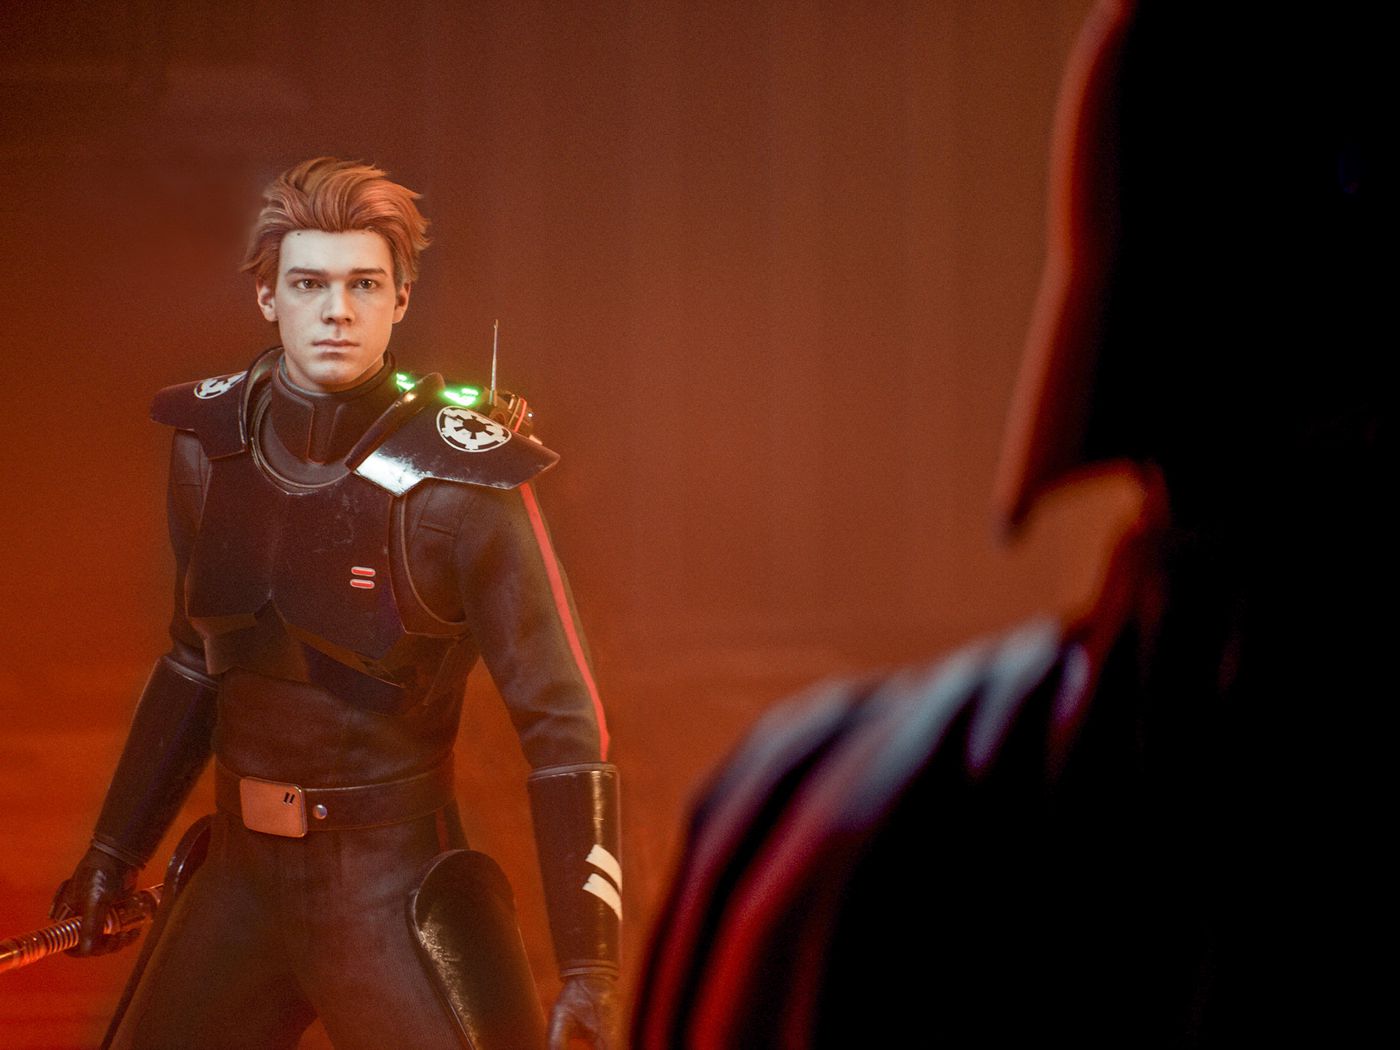 Star Wars Jedi: Fallen Order adds combat challenges, New Journey+ mode